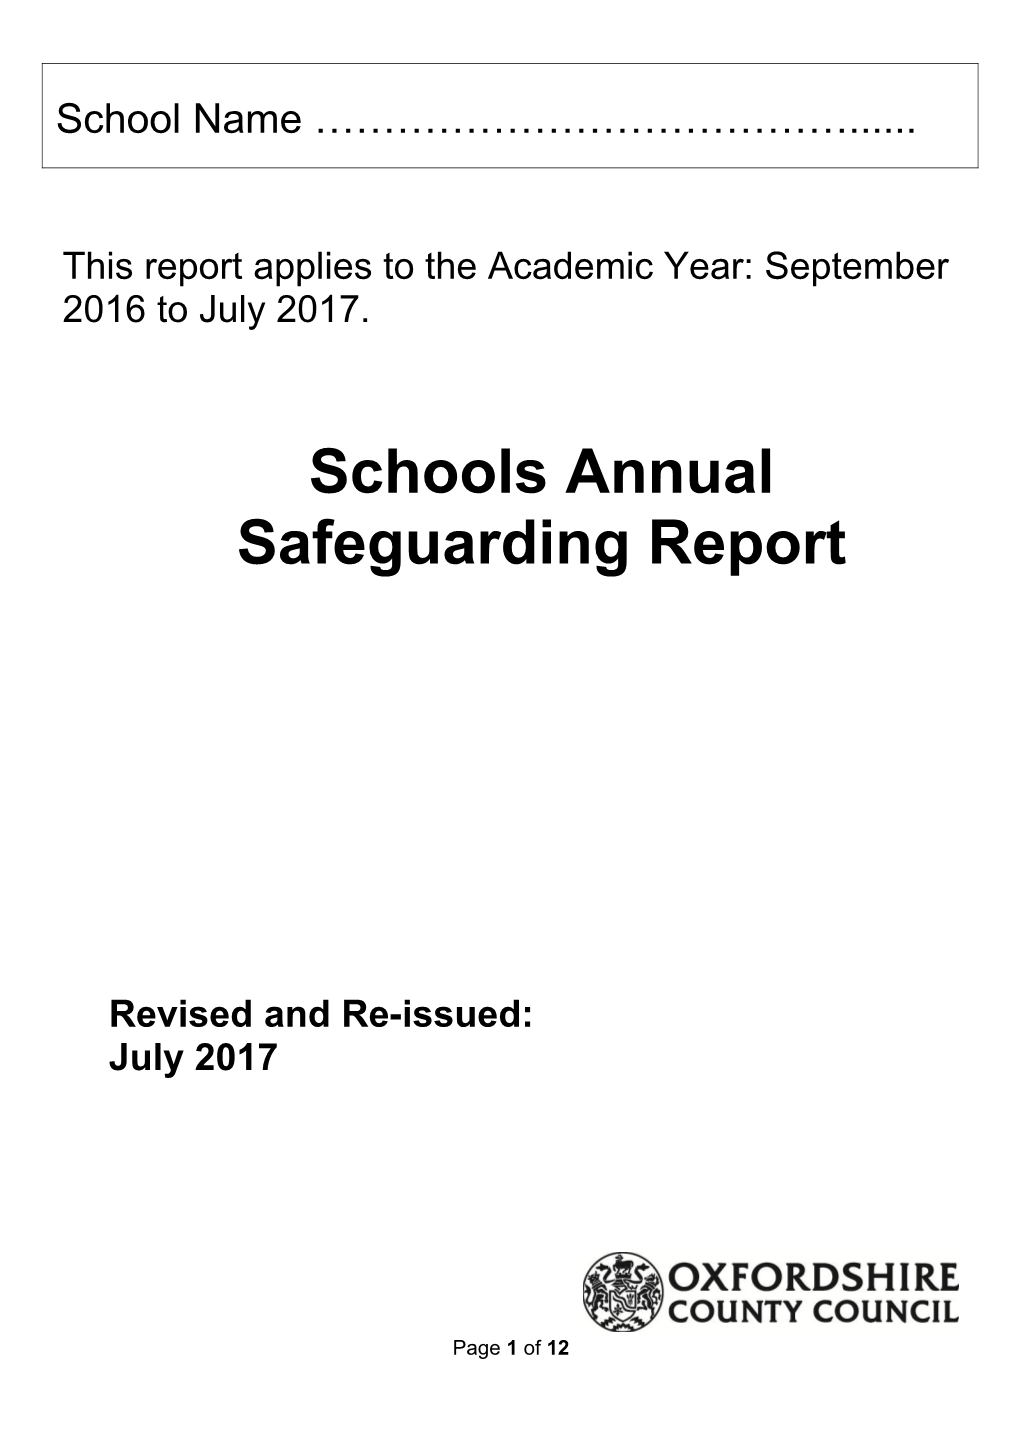 Safeguarding Annual Report for Head Teachers